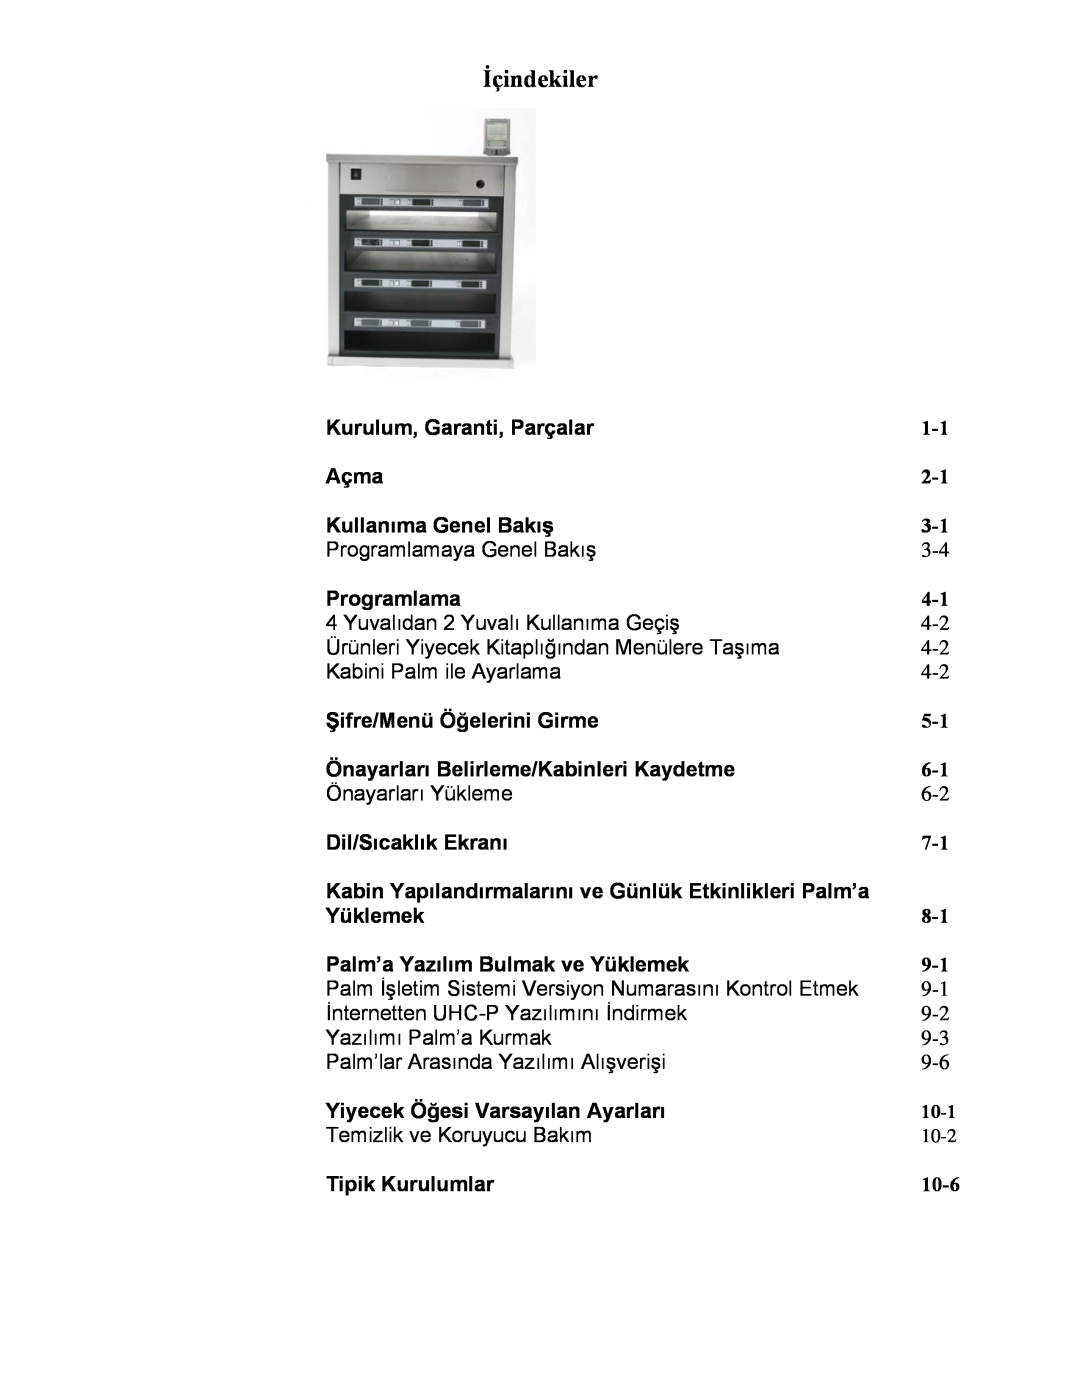 Frymaster UHC-P 2-yuva, UHC-P 4-yuva manual İçindekiler, 10-6 